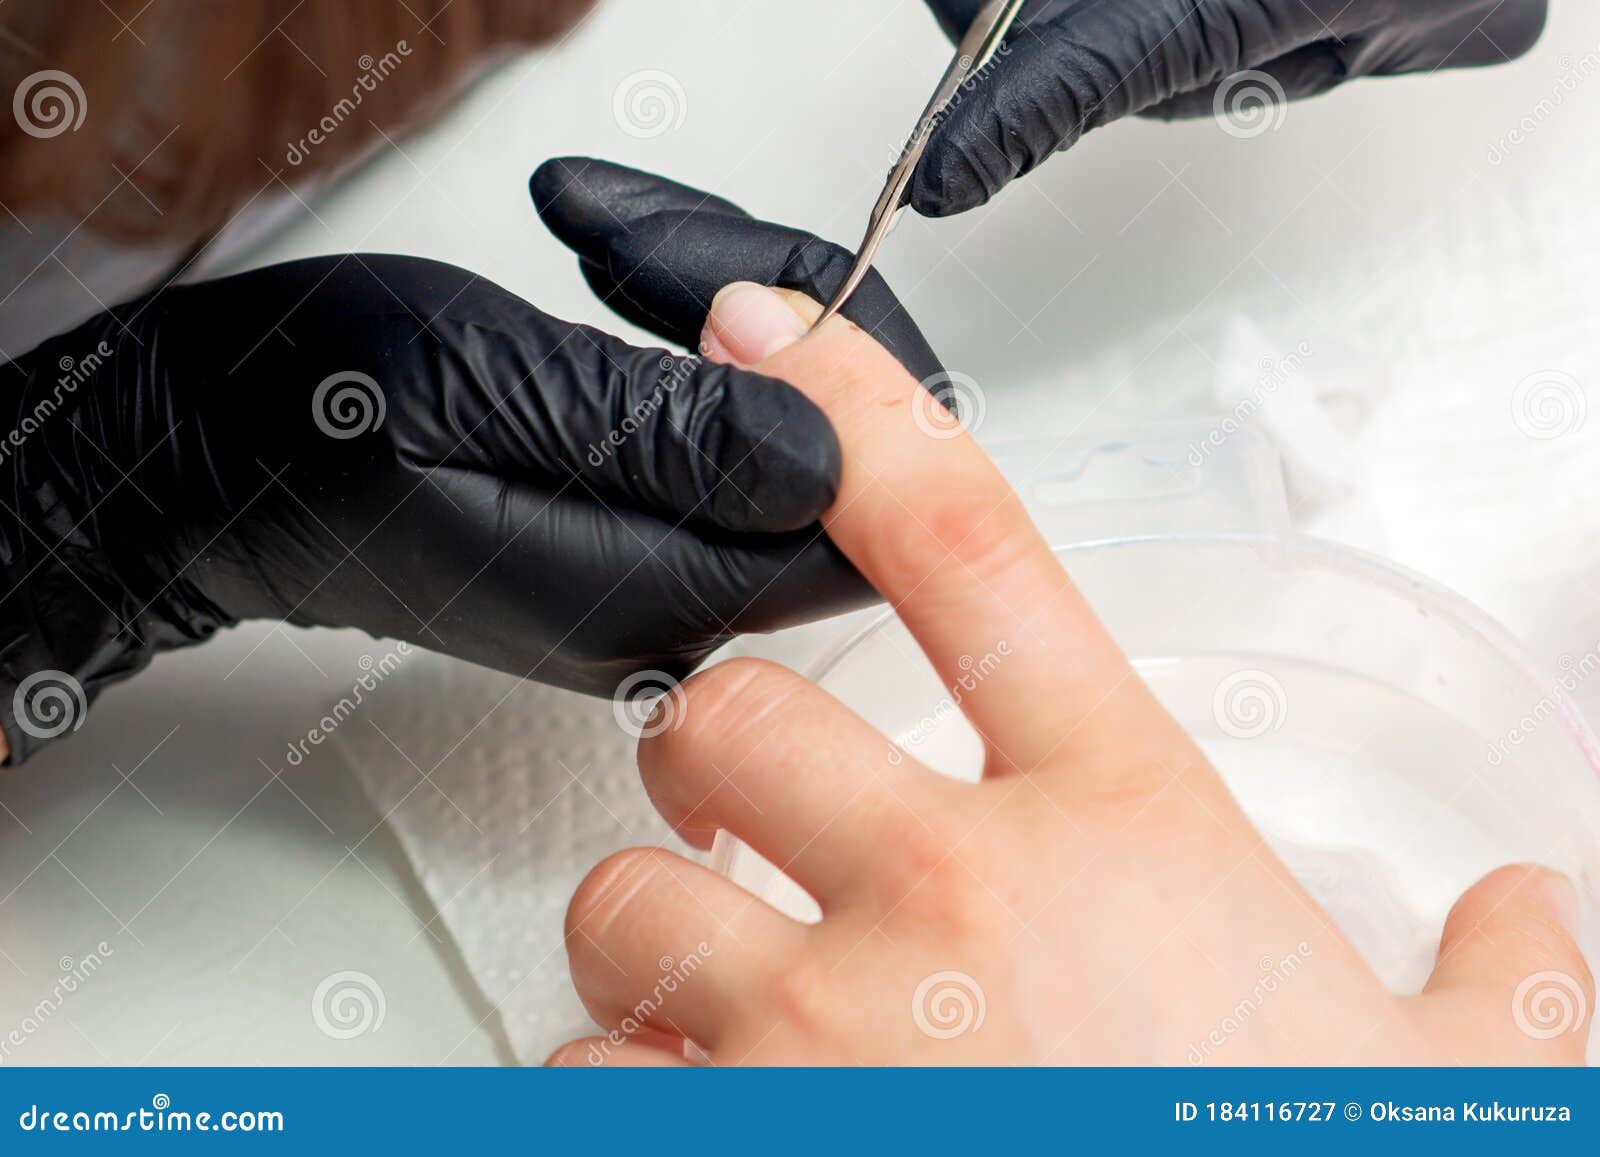 beautician cutting cuticles of woman